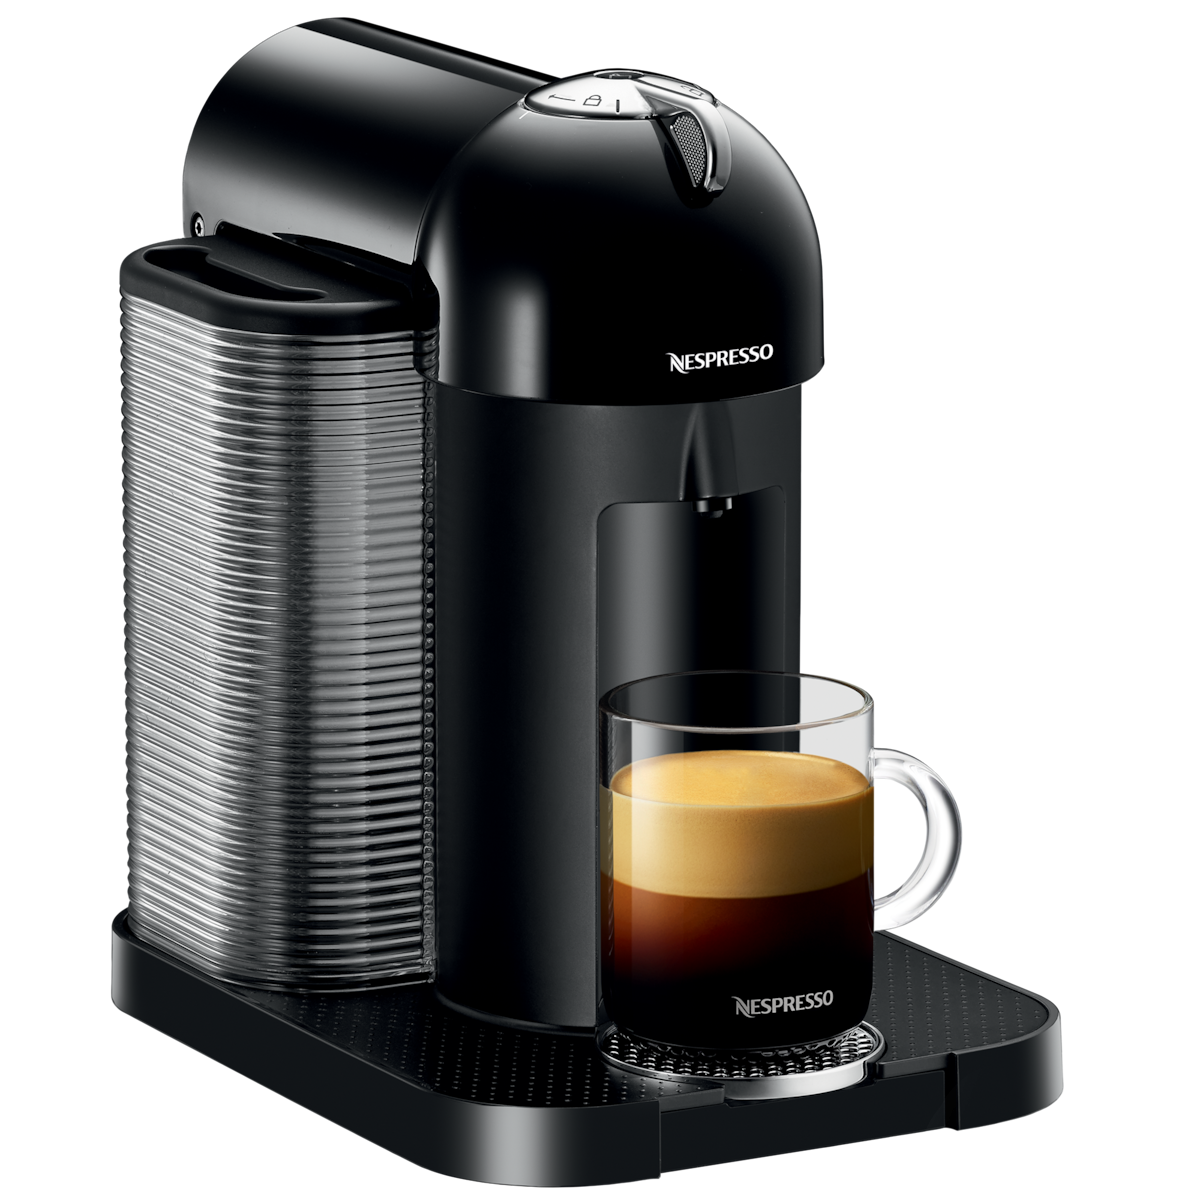 How to descale a Nespresso machine: 9 steps to keep your coffee fresh